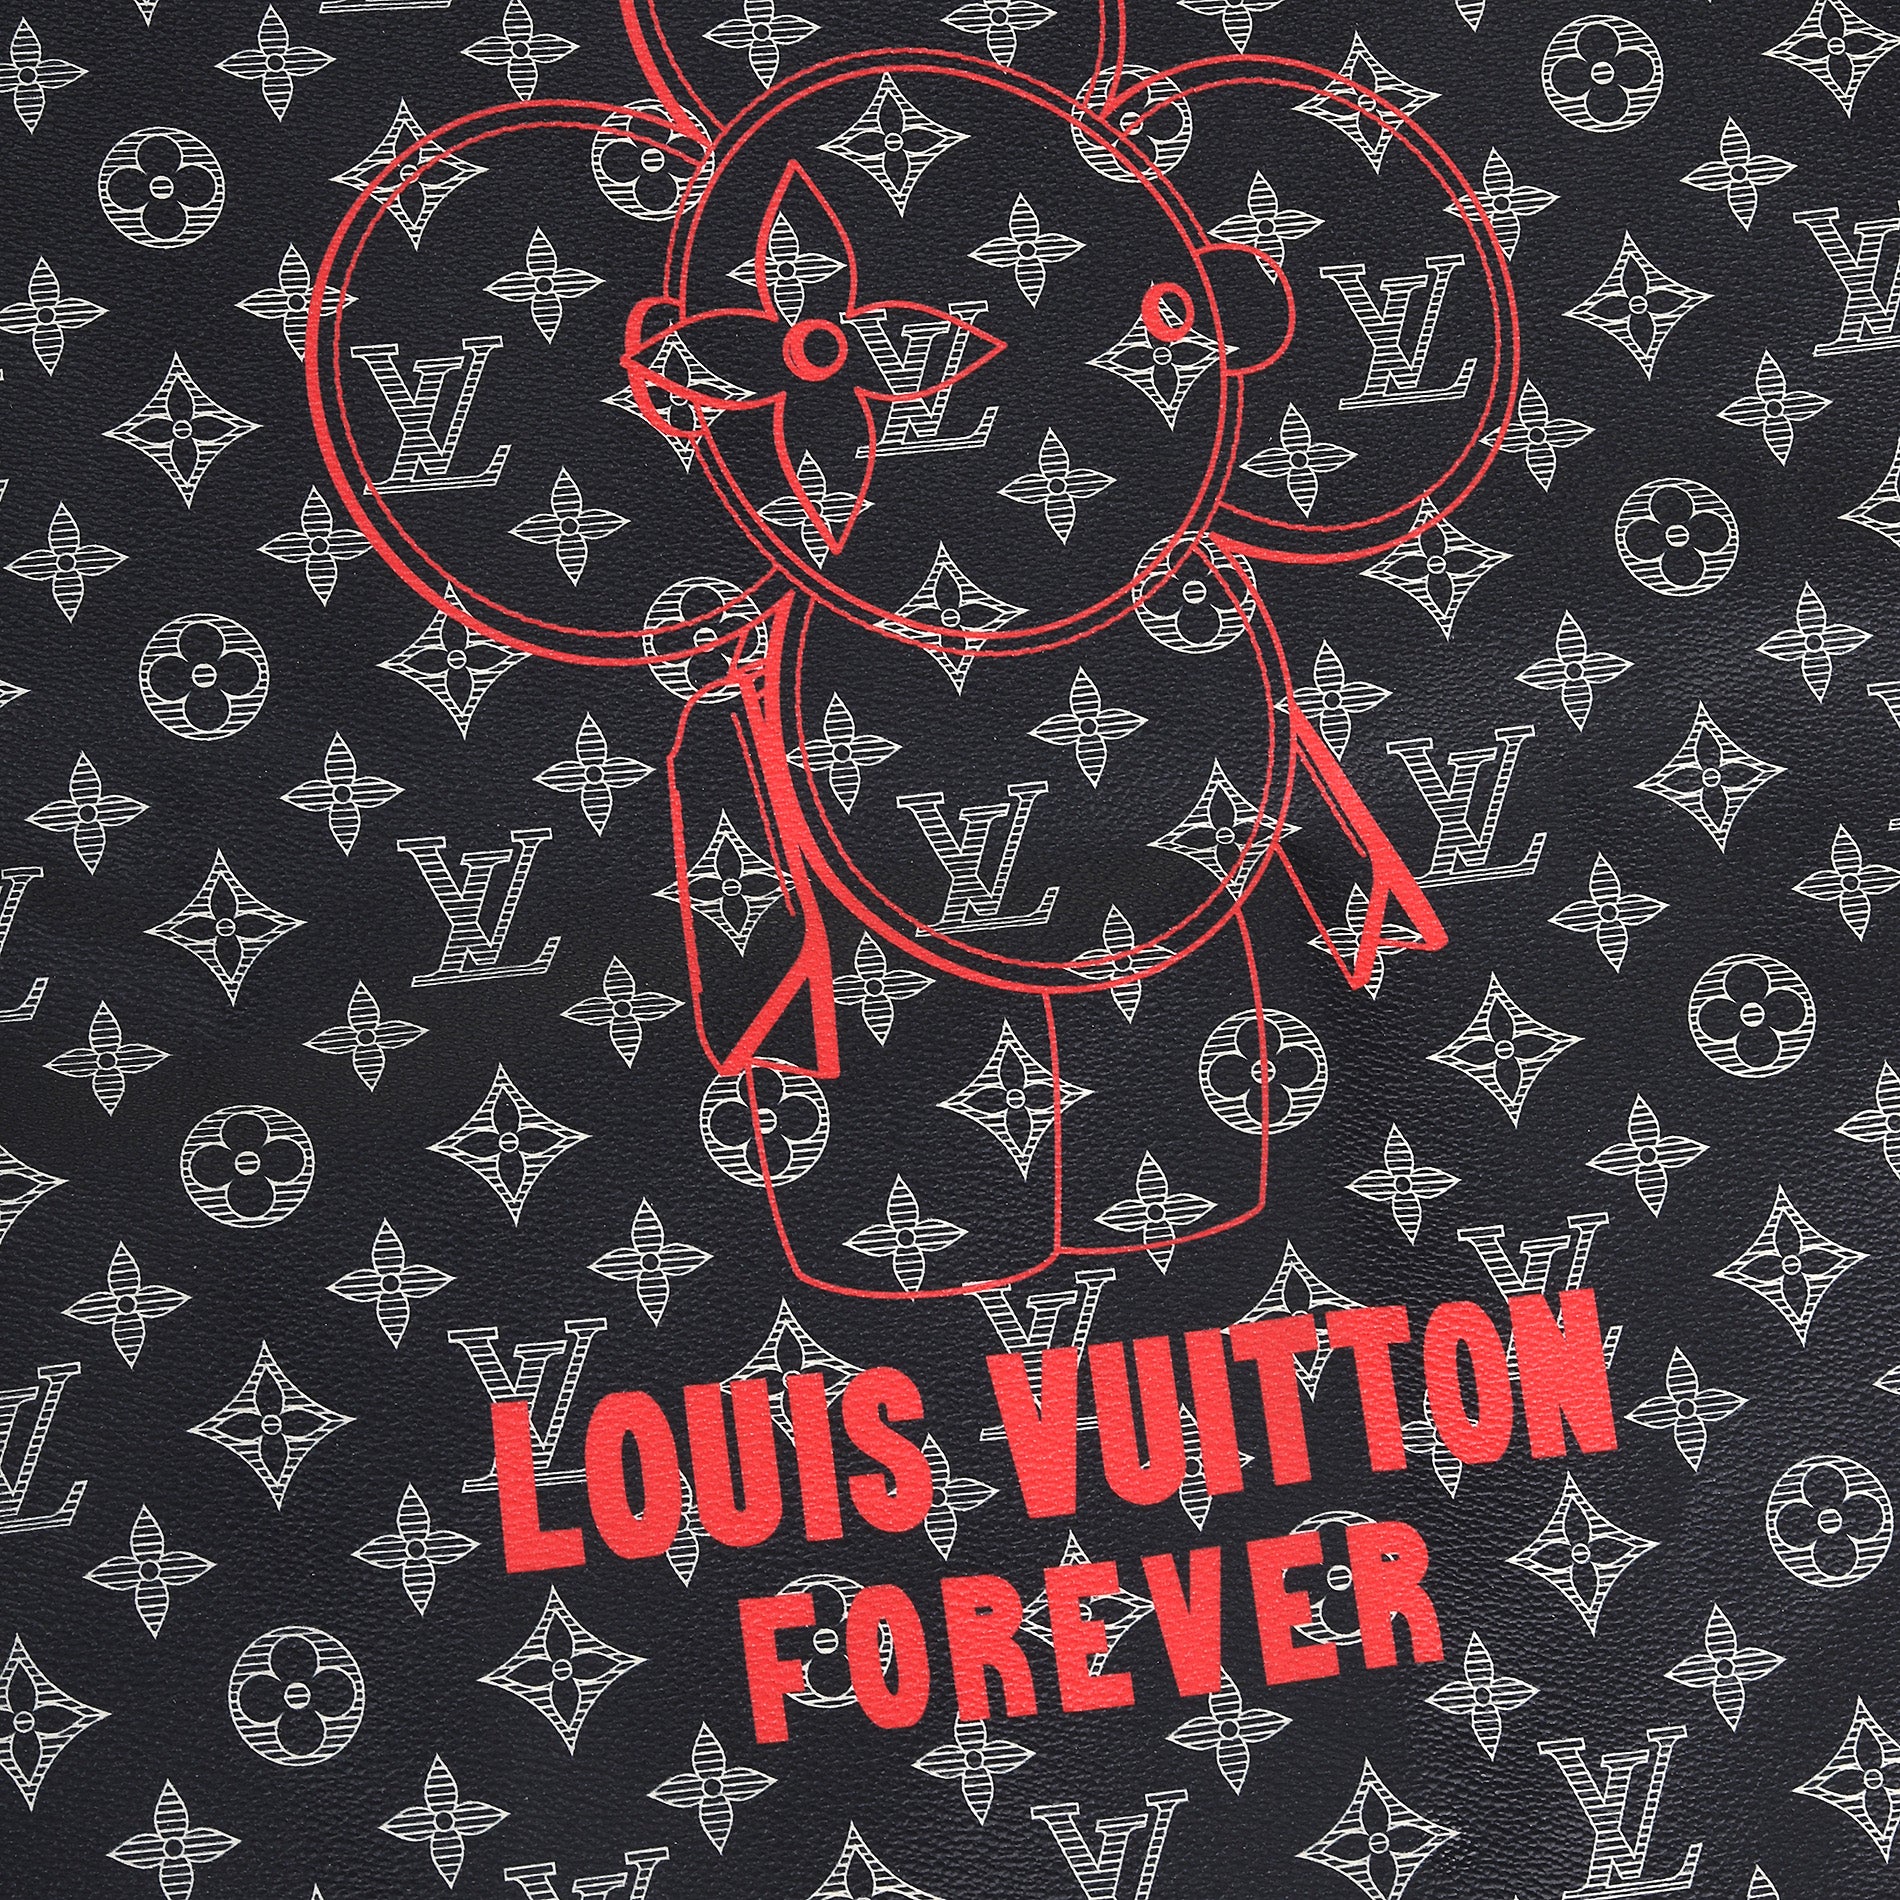 Louis Vuitton Forever